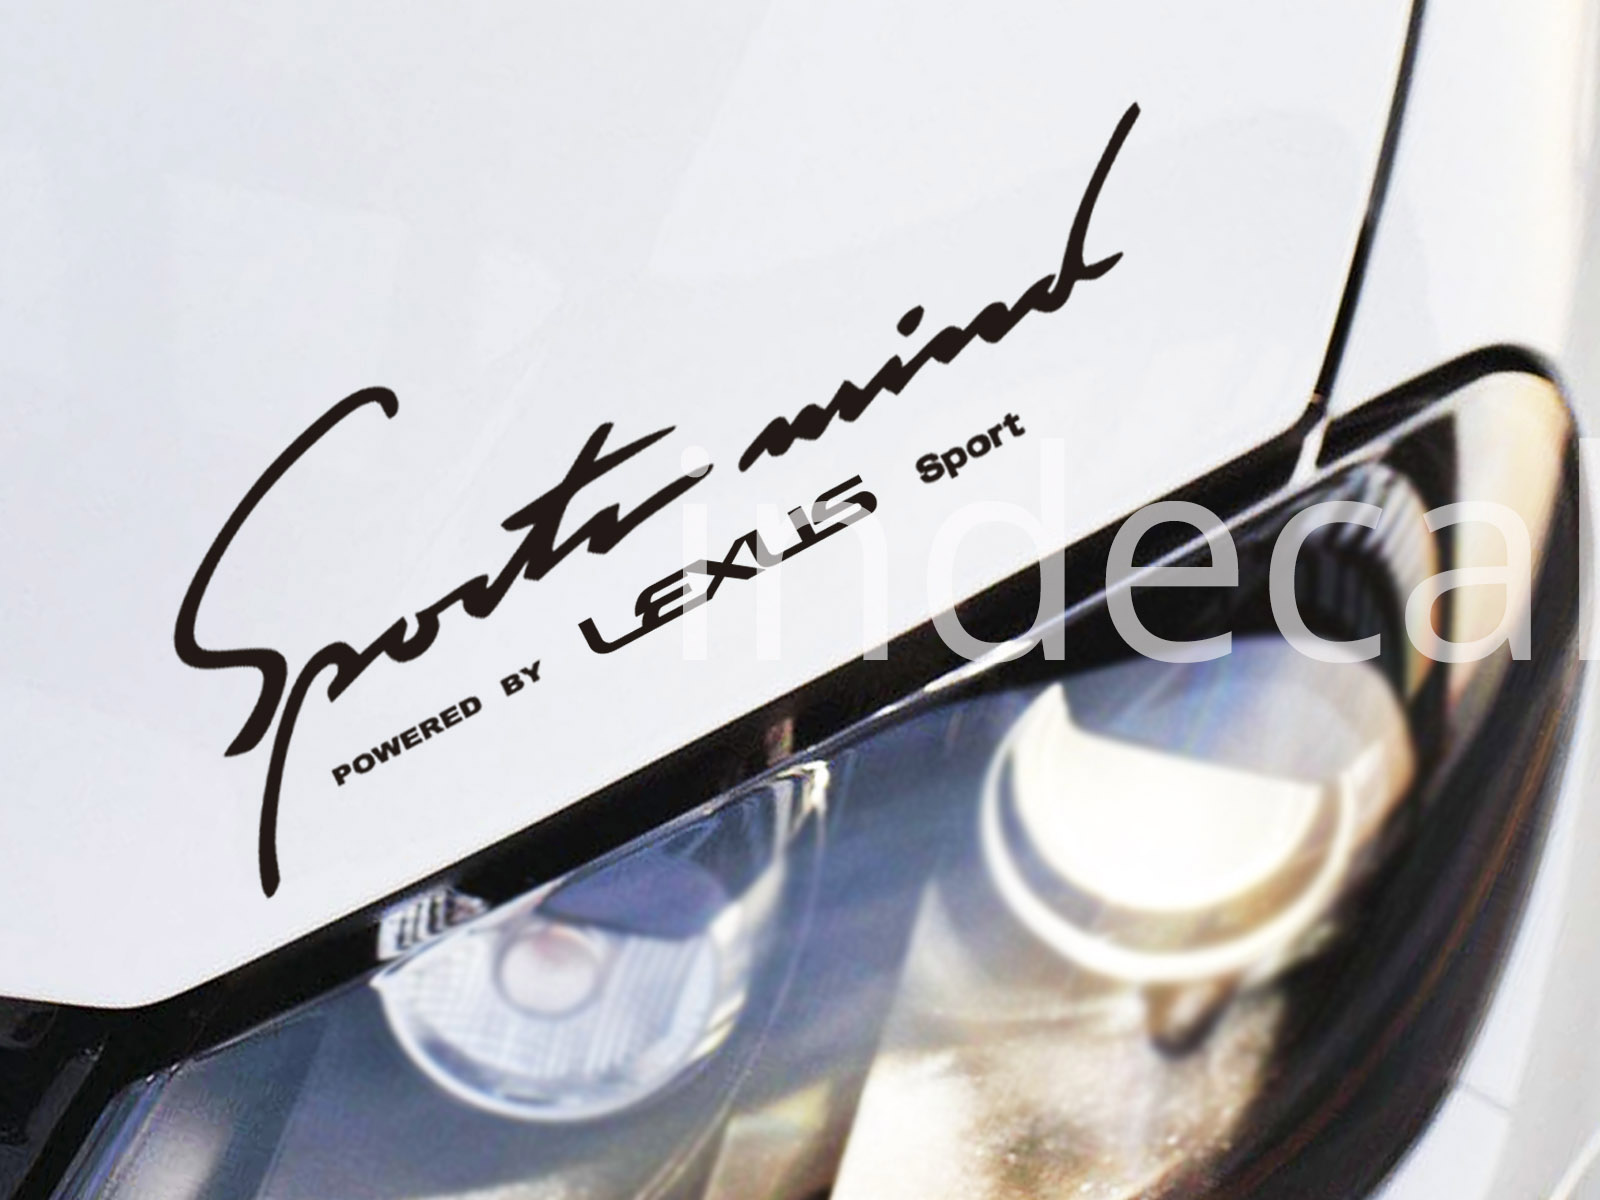 1 x Lexus Sports Mind Sticker - Black